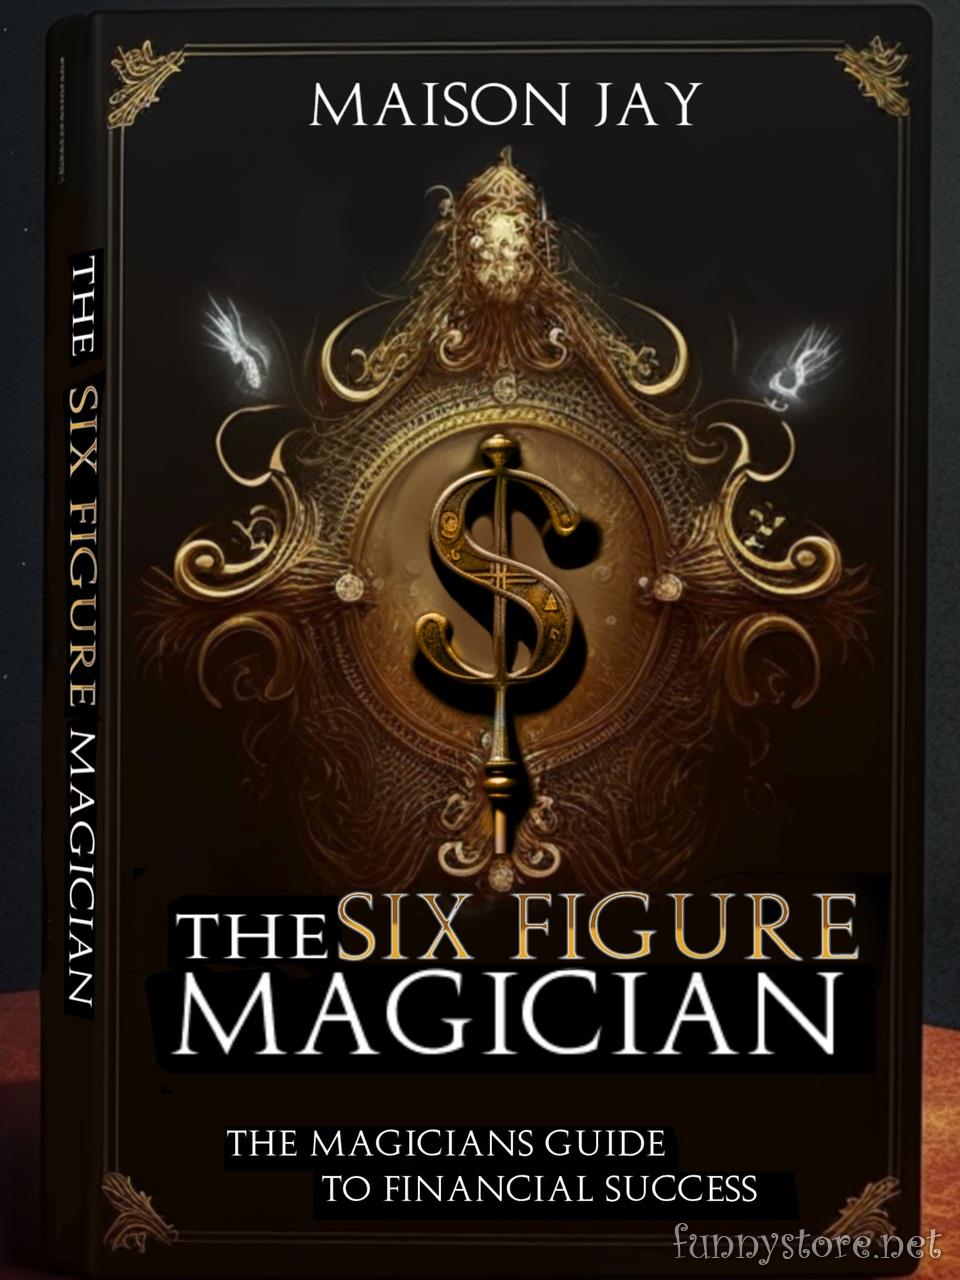 Maison Jay - The Six Figure Magician